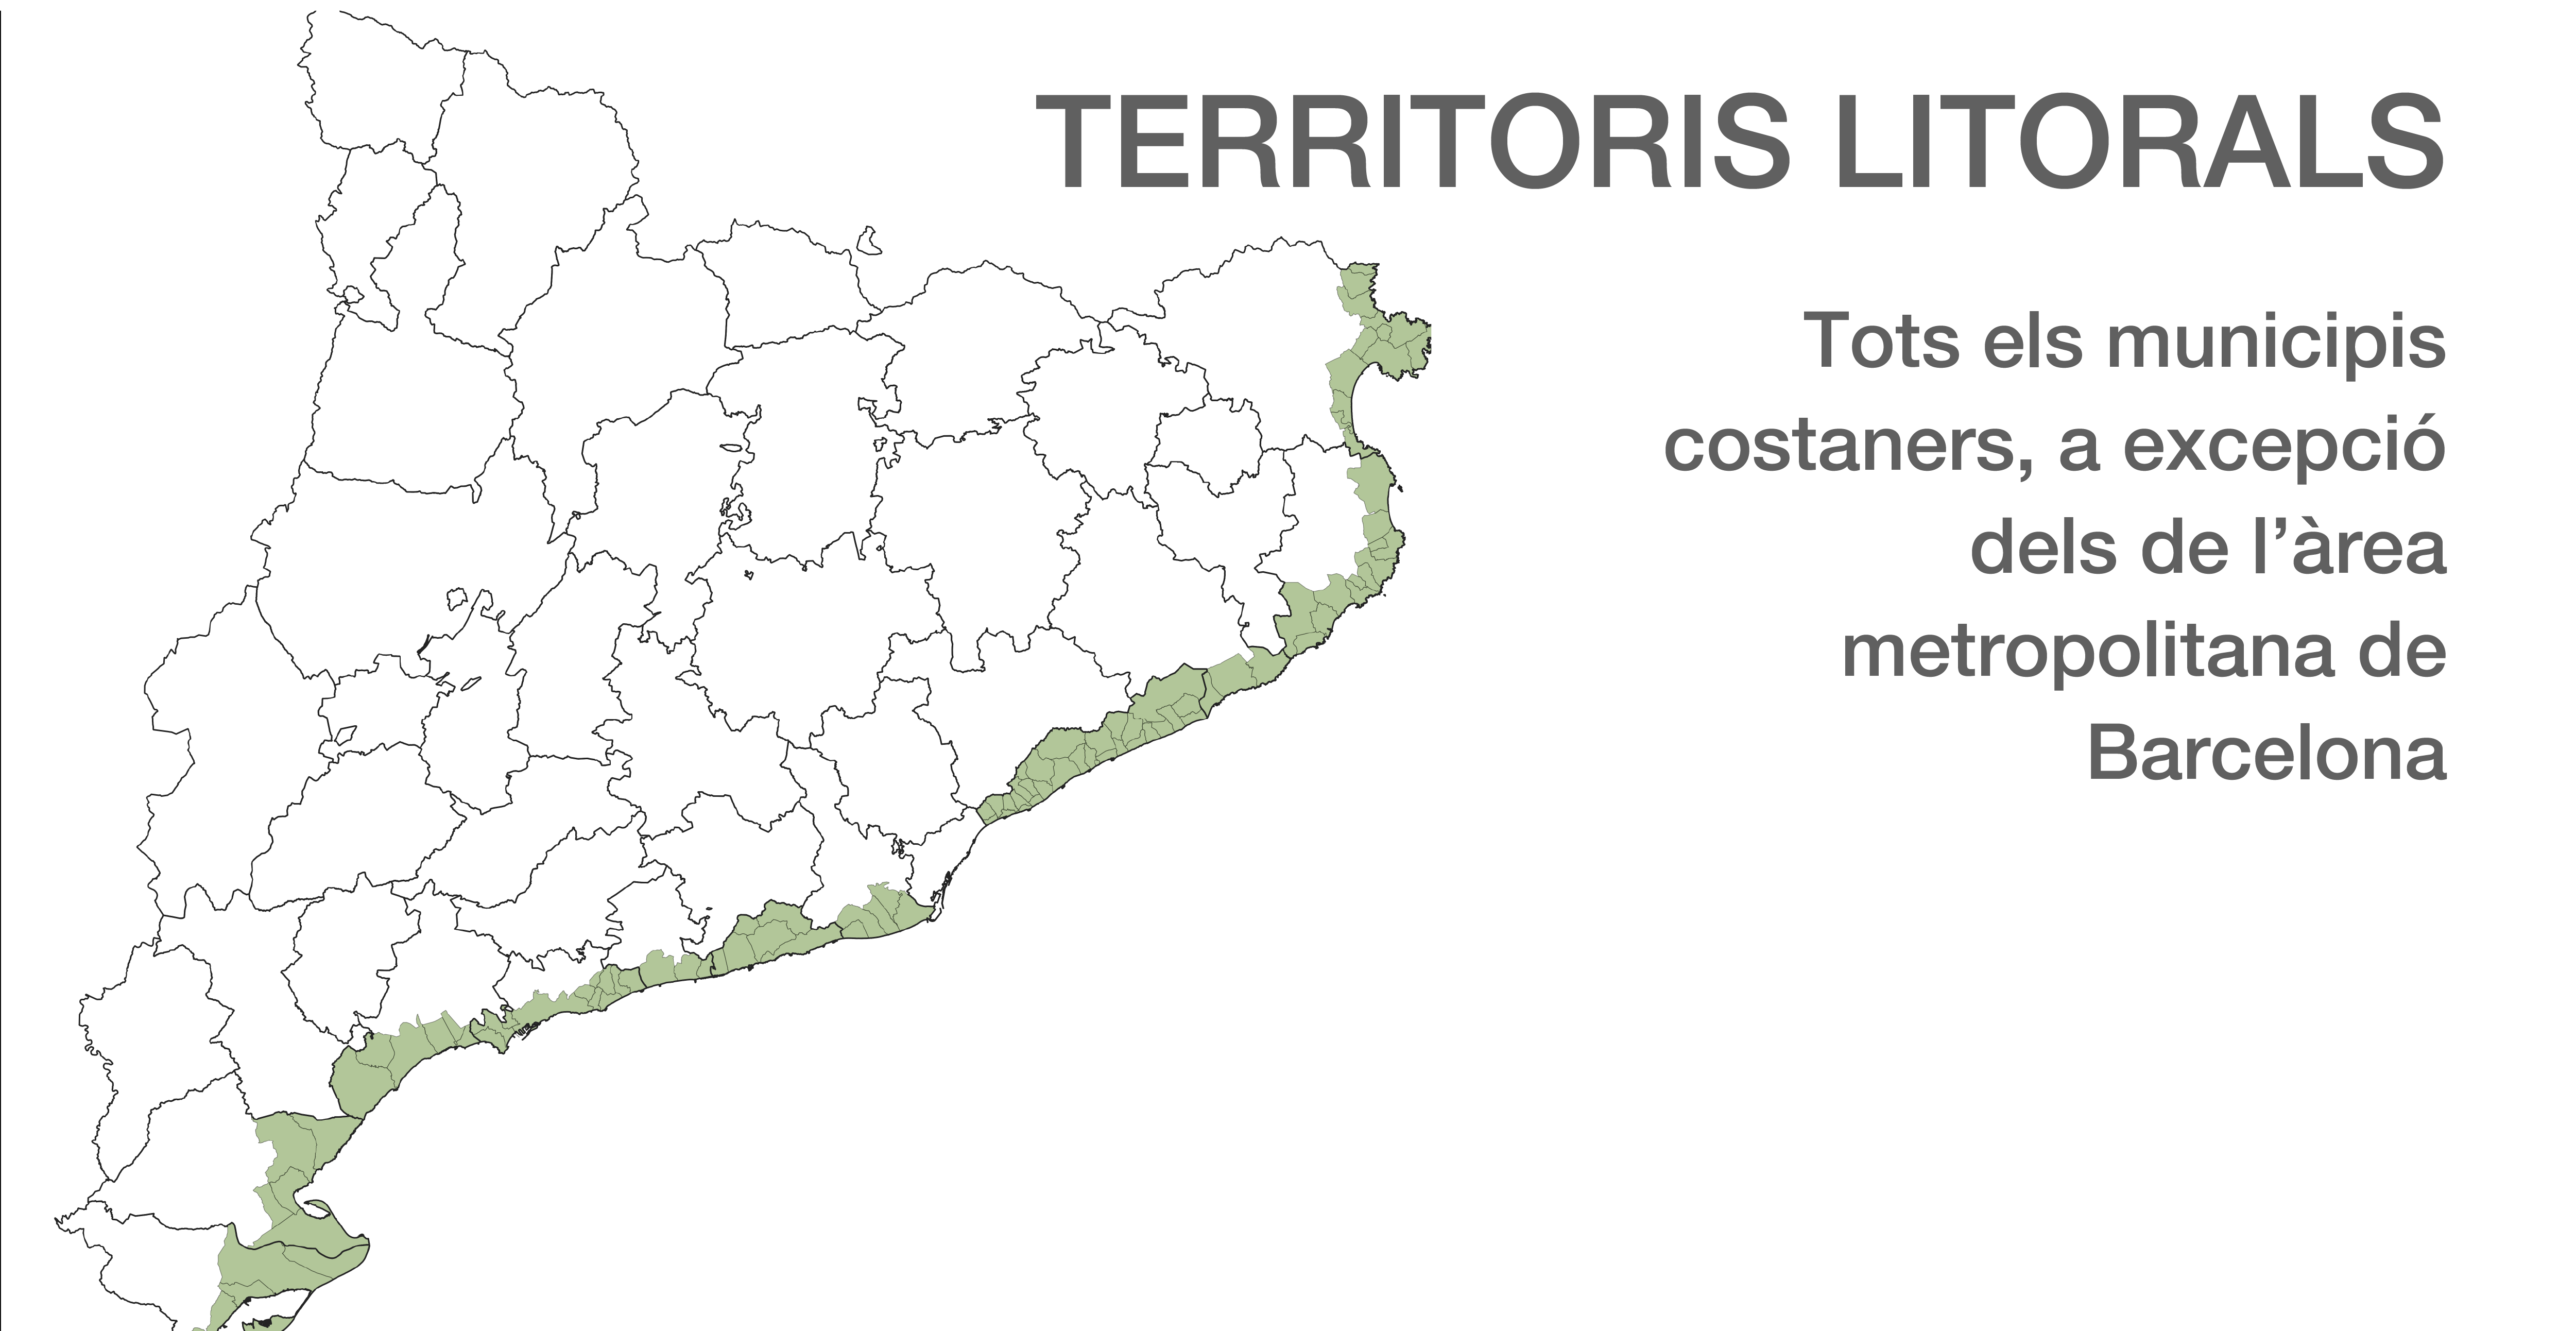 Sessió territorial 2: Territoris litorals